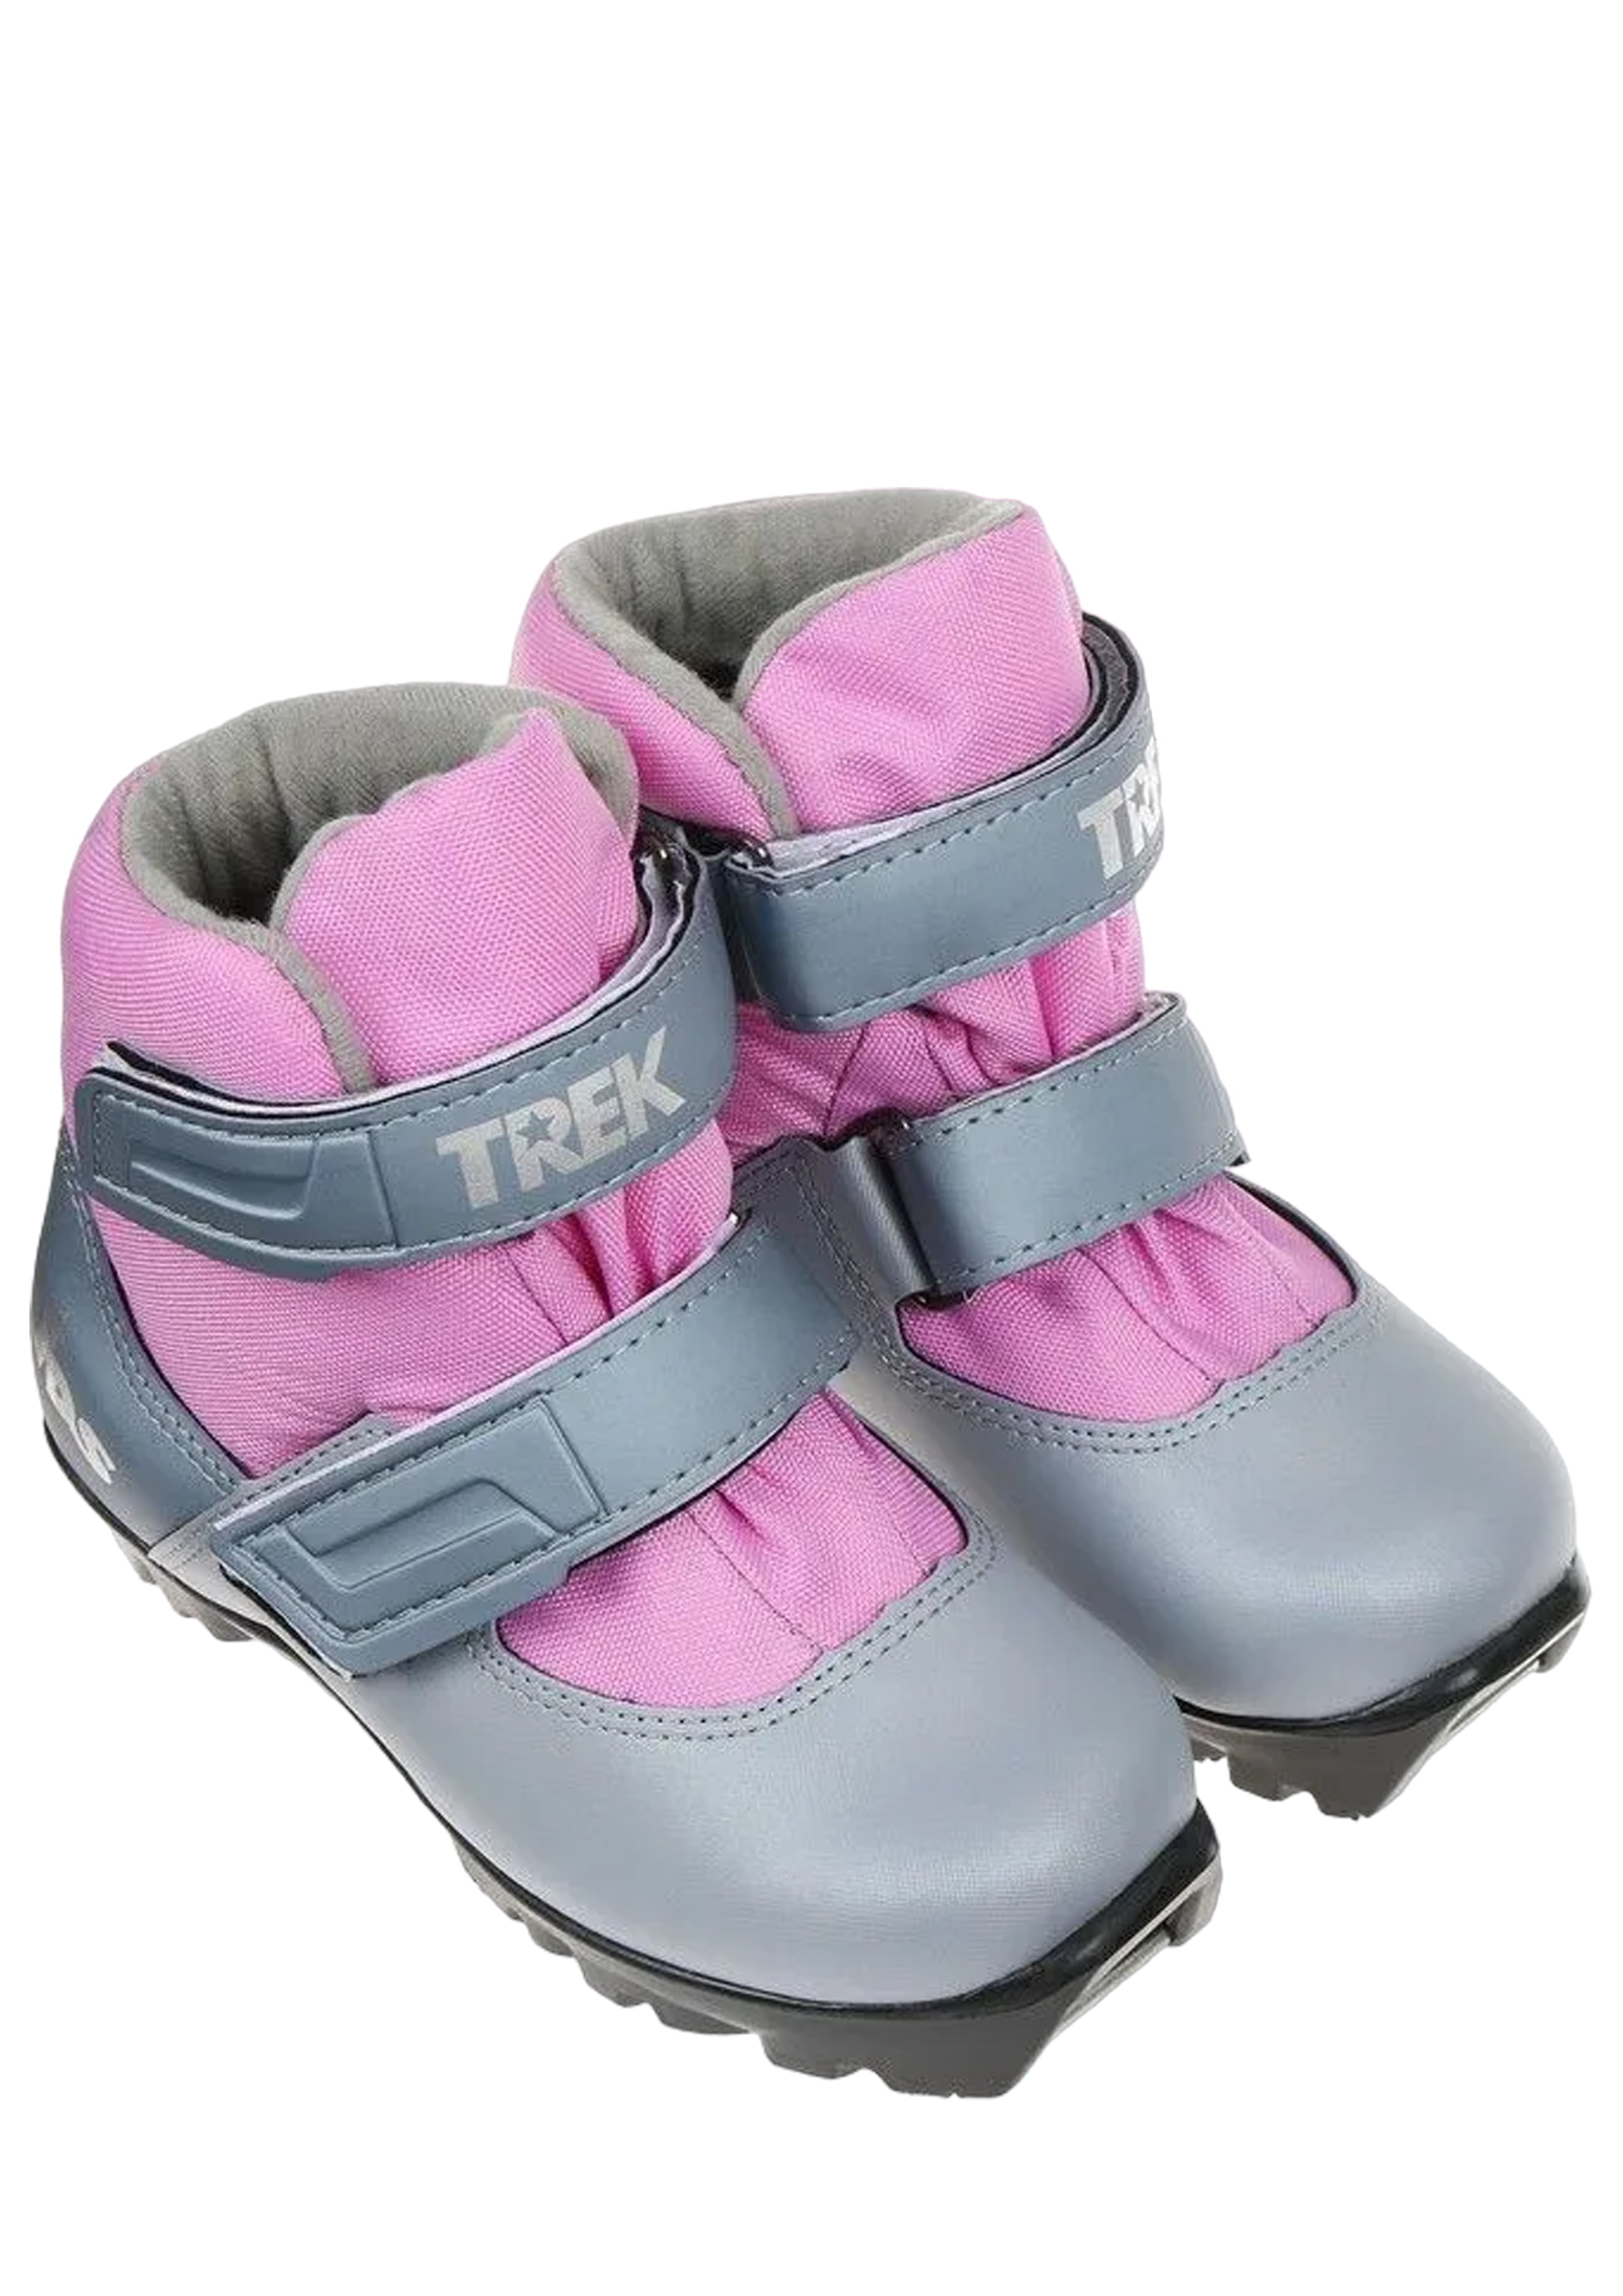 Ботинки лыжные NNN TREK Kids4 металлик